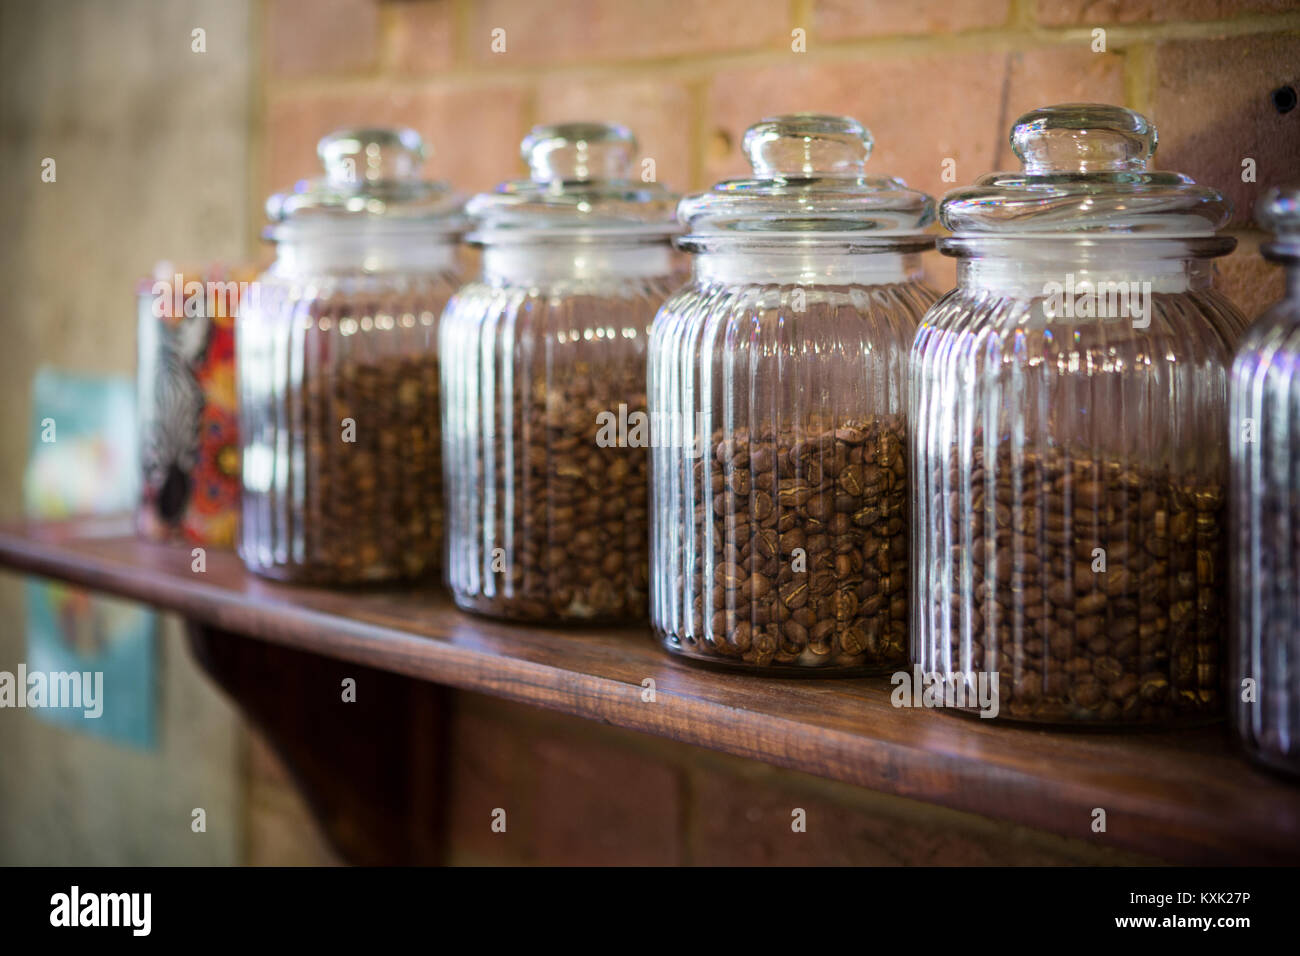 https://c8.alamy.com/comp/KXK27P/coffee-beans-in-glass-jars-on-a-shelf-KXK27P.jpg